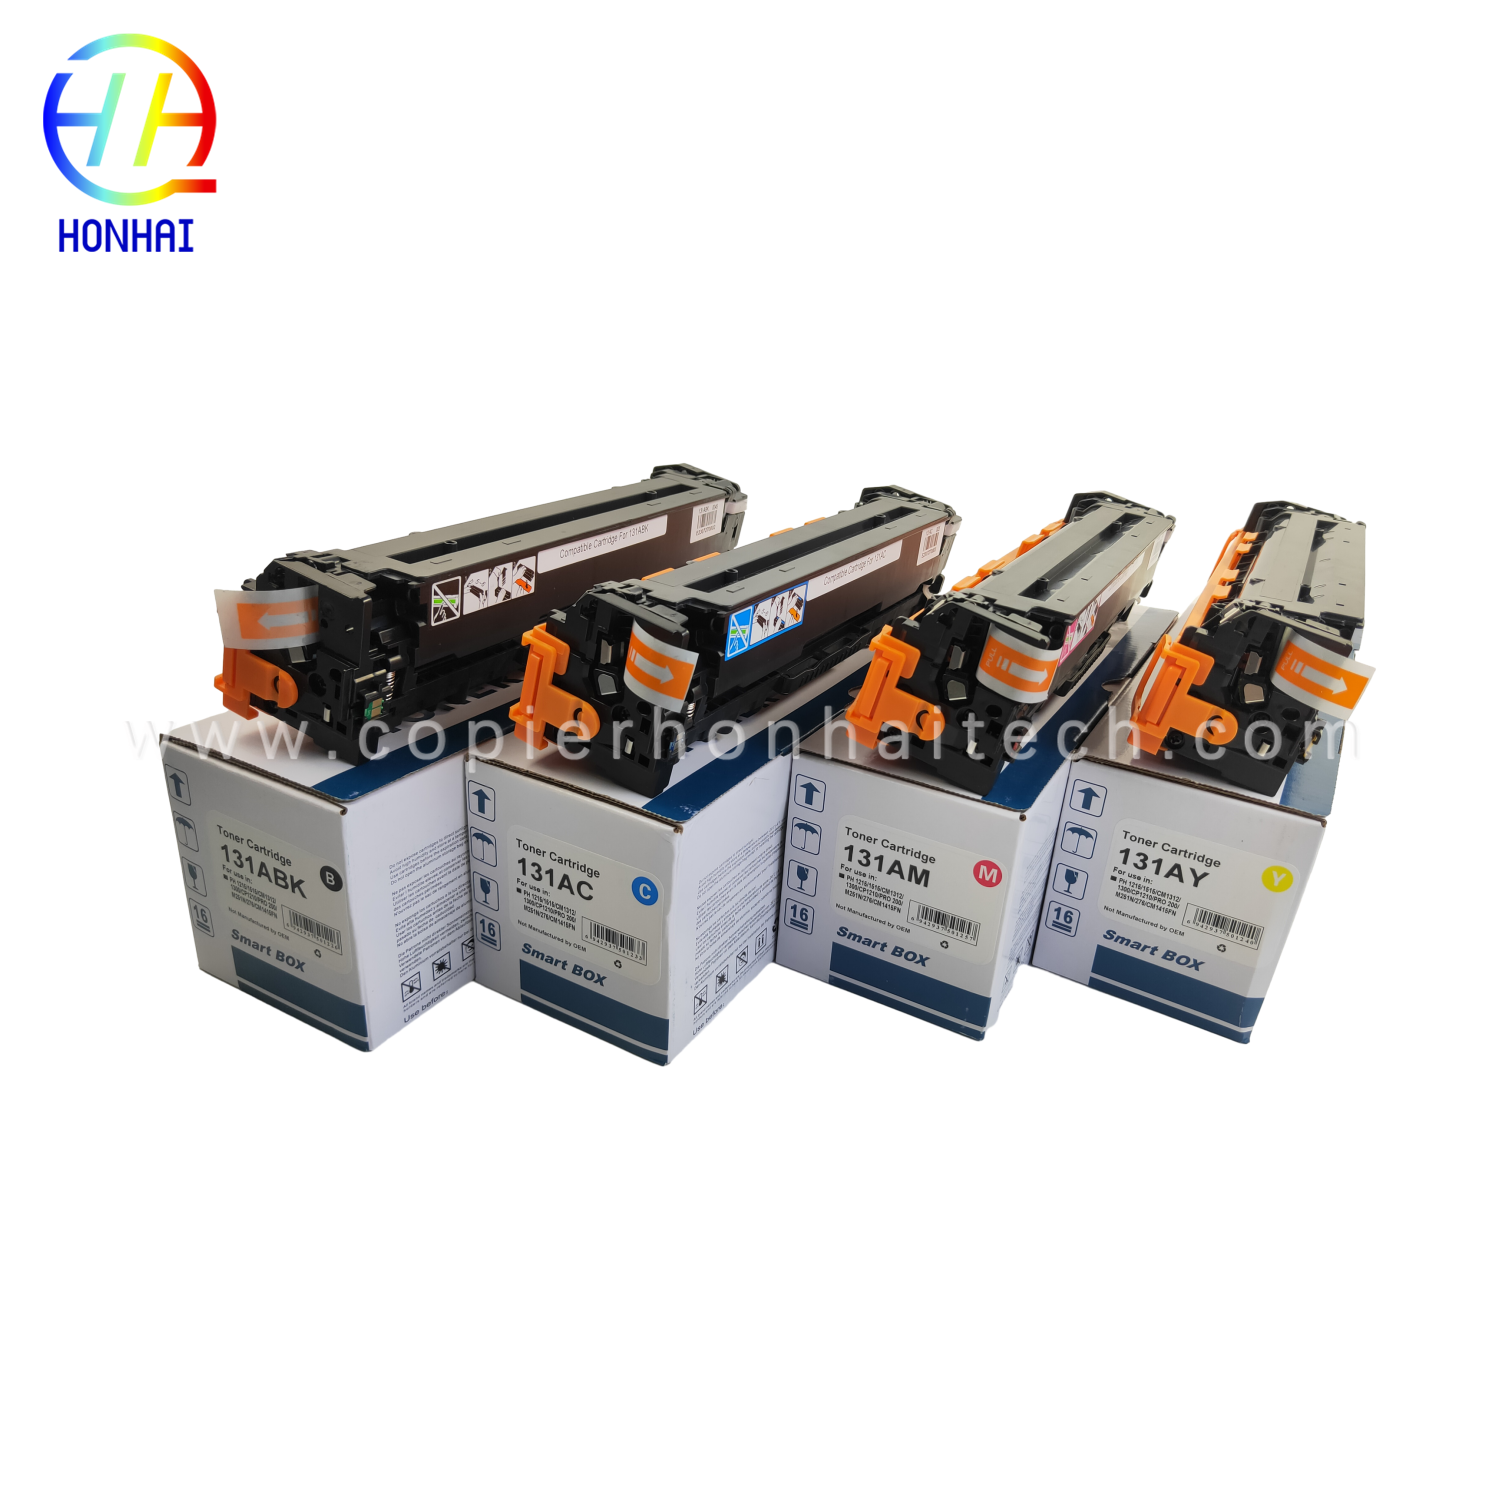 https://www.copierhonhaitech.com/toner-cartridge-for-hp-laserjet-pro-200-color-m251nw-mfp-m276nw-cf212a-cf213a-product/